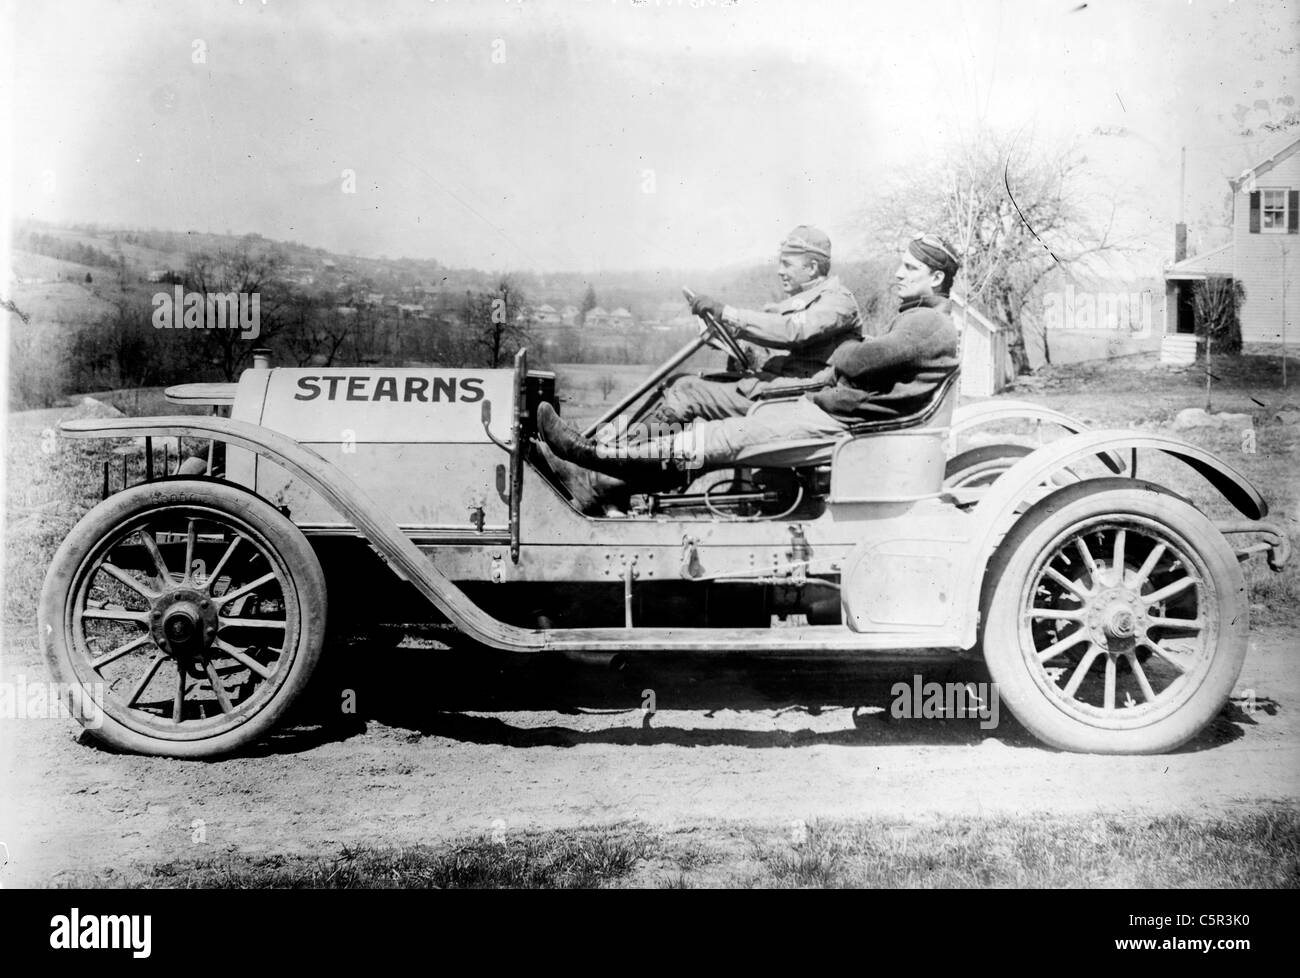 Briarcliff Auto Race - F.W. Leland en su auto "tearns' circa 1900 Foto de stock